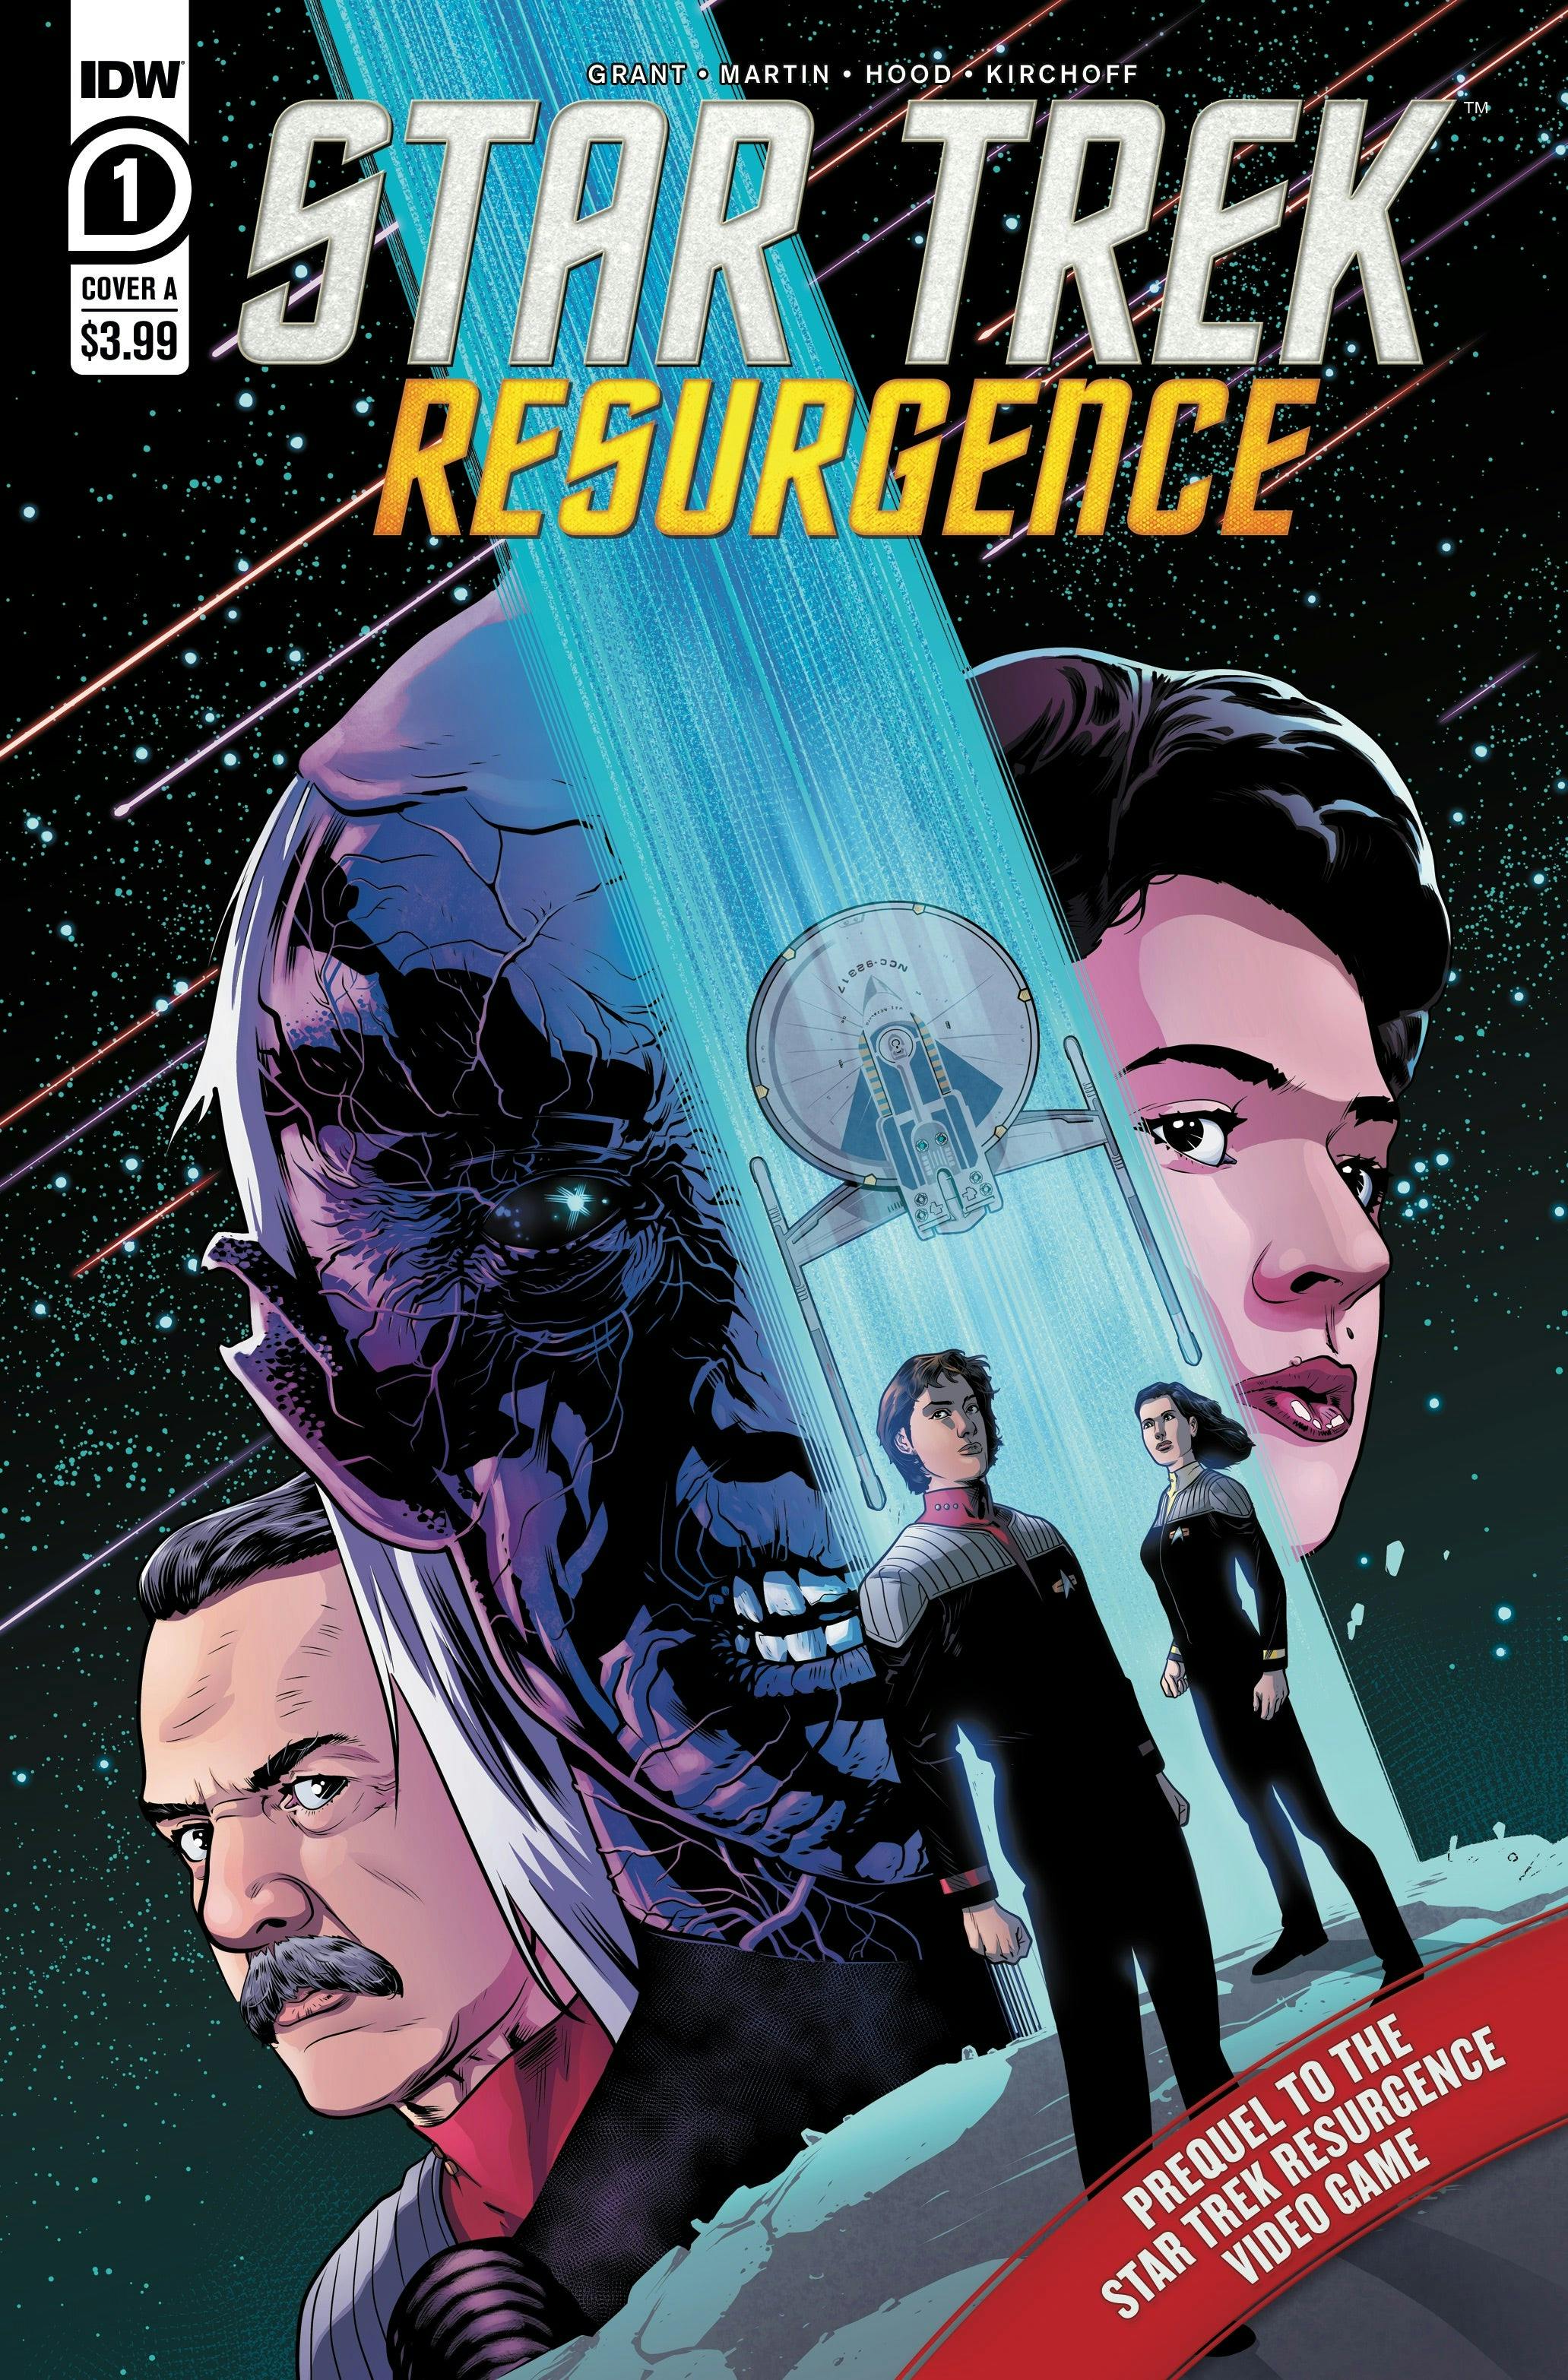 STAR TREK: RESURGENCE #1 Cover A art by Josh Hood